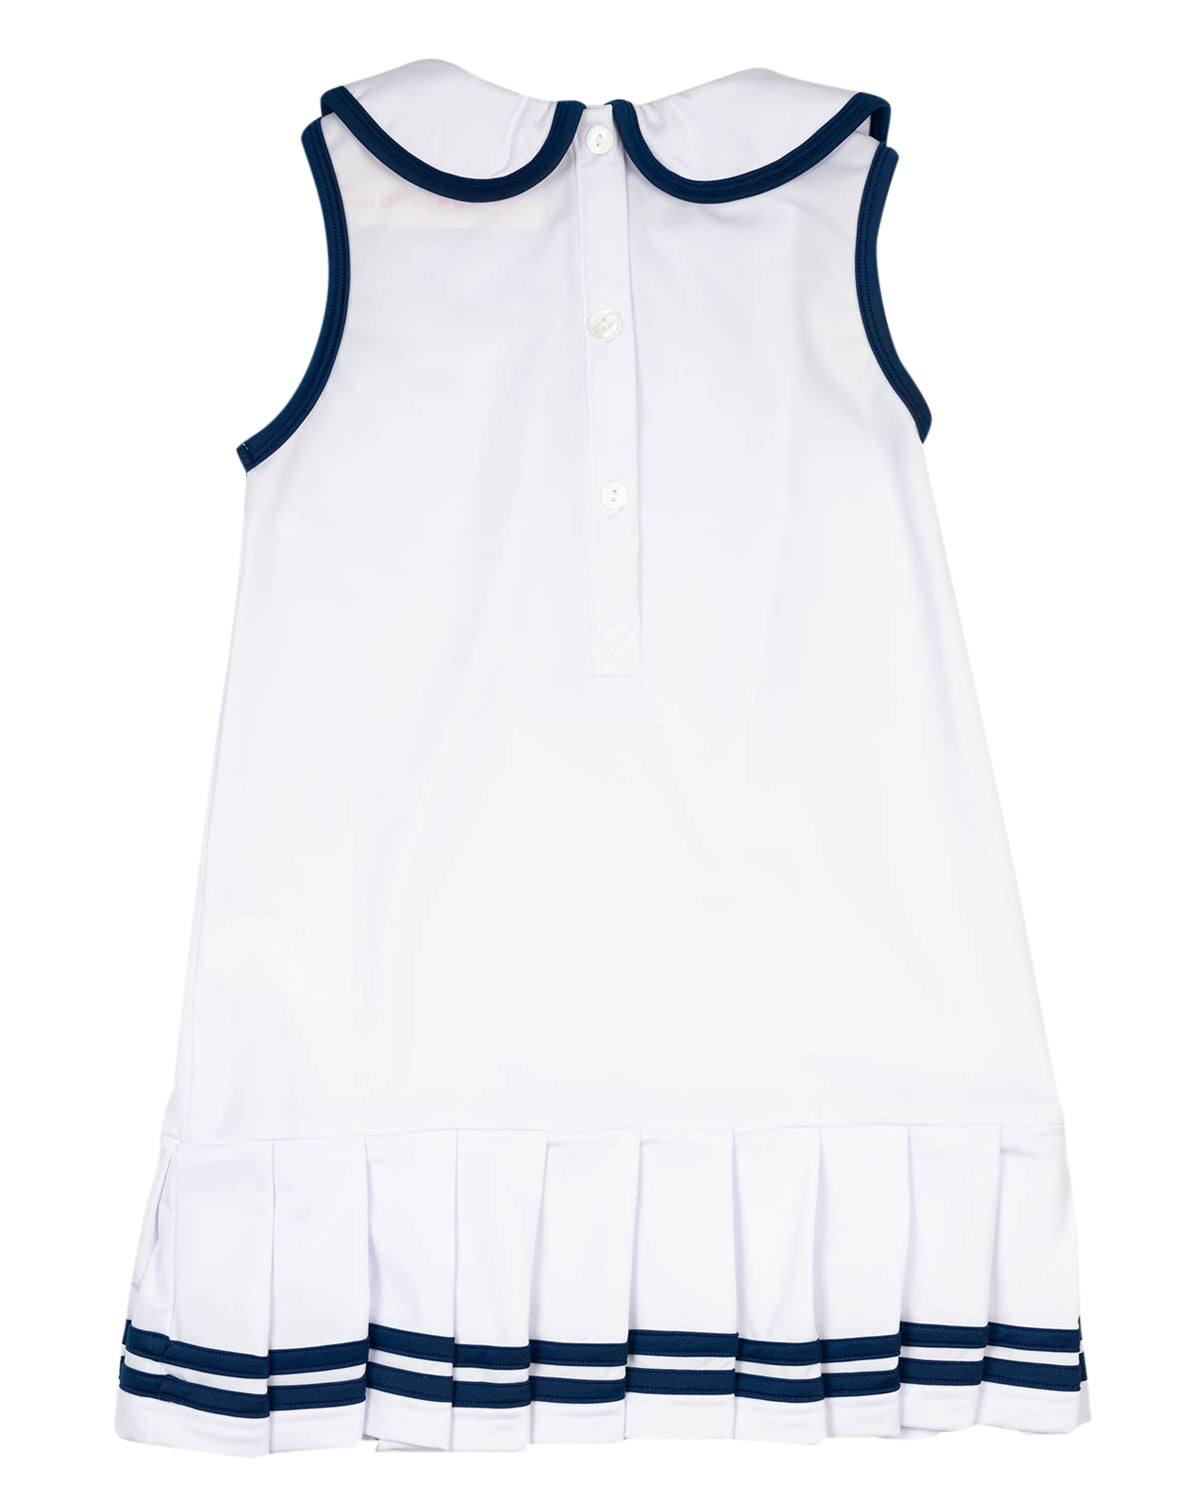 White Knit Tennis Dress with Navy Trim